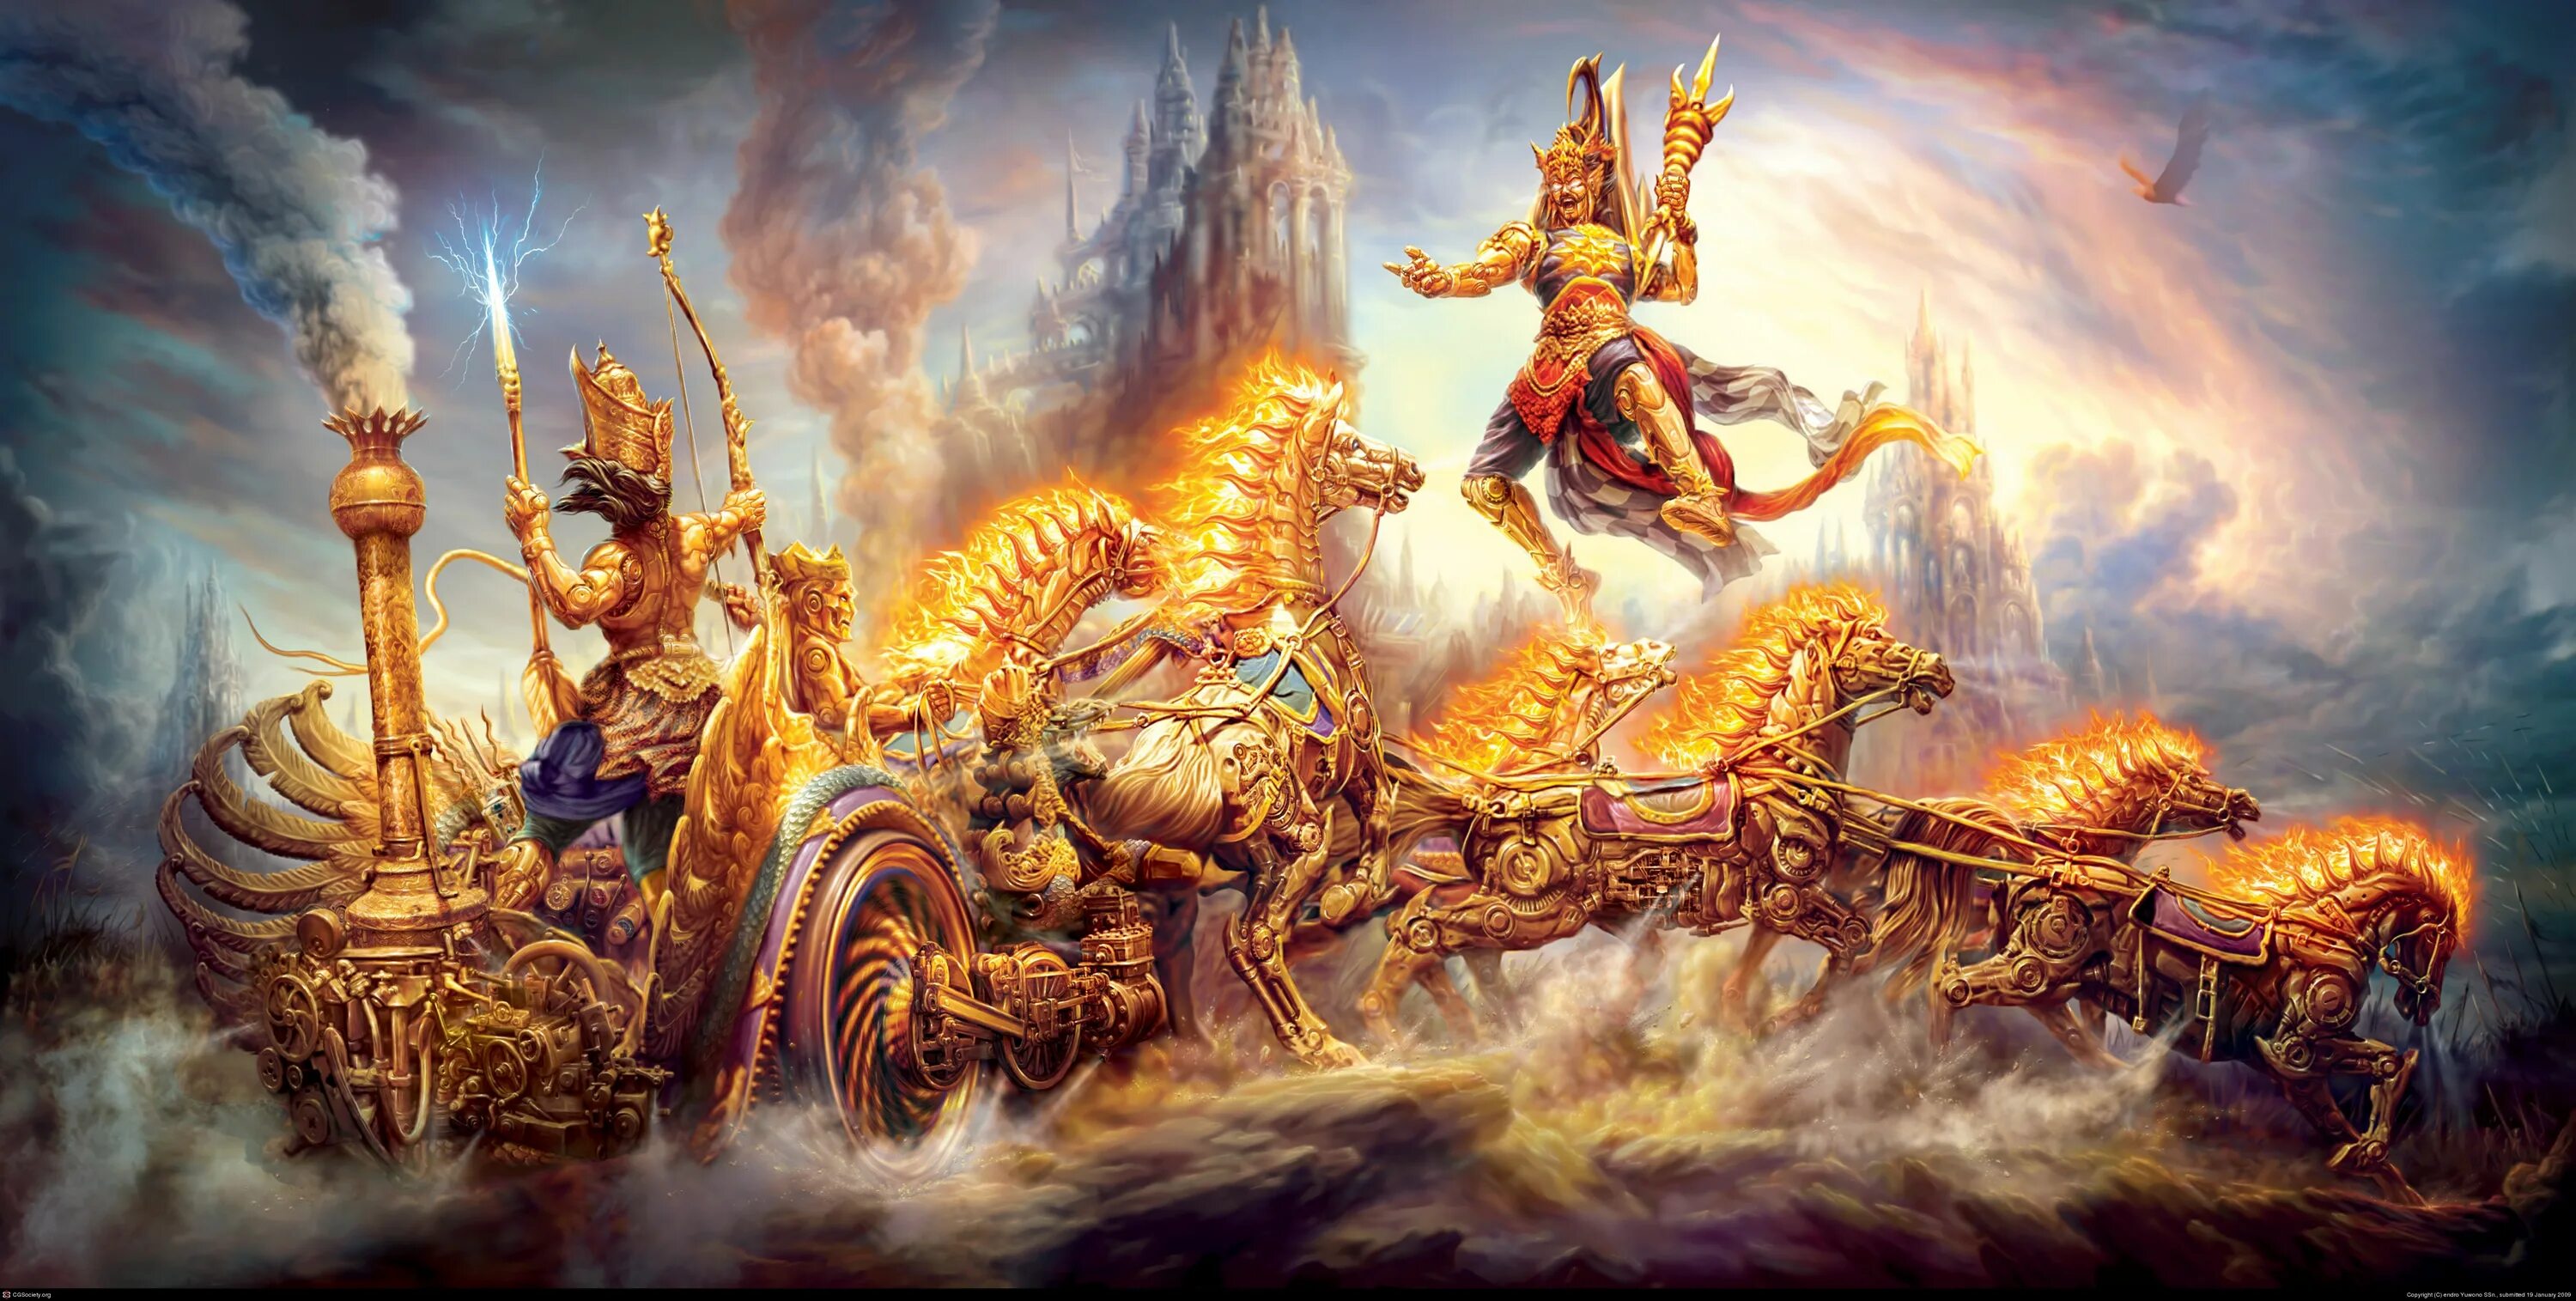 Битва ариев. Махабхарата битва богов. Индийский эпос Махабхарата. Махабхарата эпос битва Курукшетра. Индра Махабхарата.